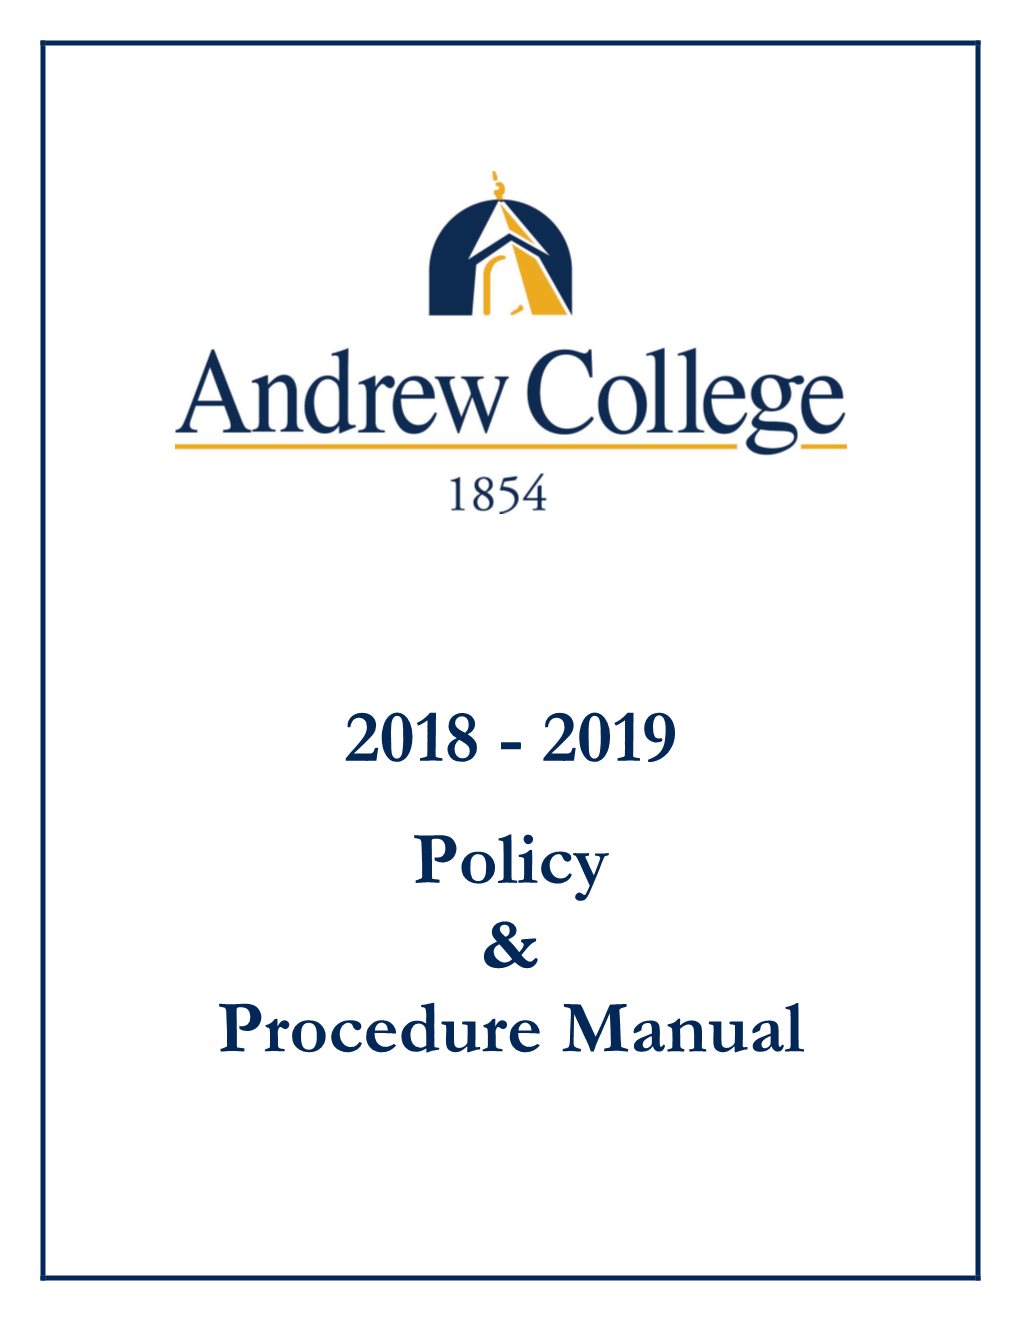 2019 Policy & Procedure Manual